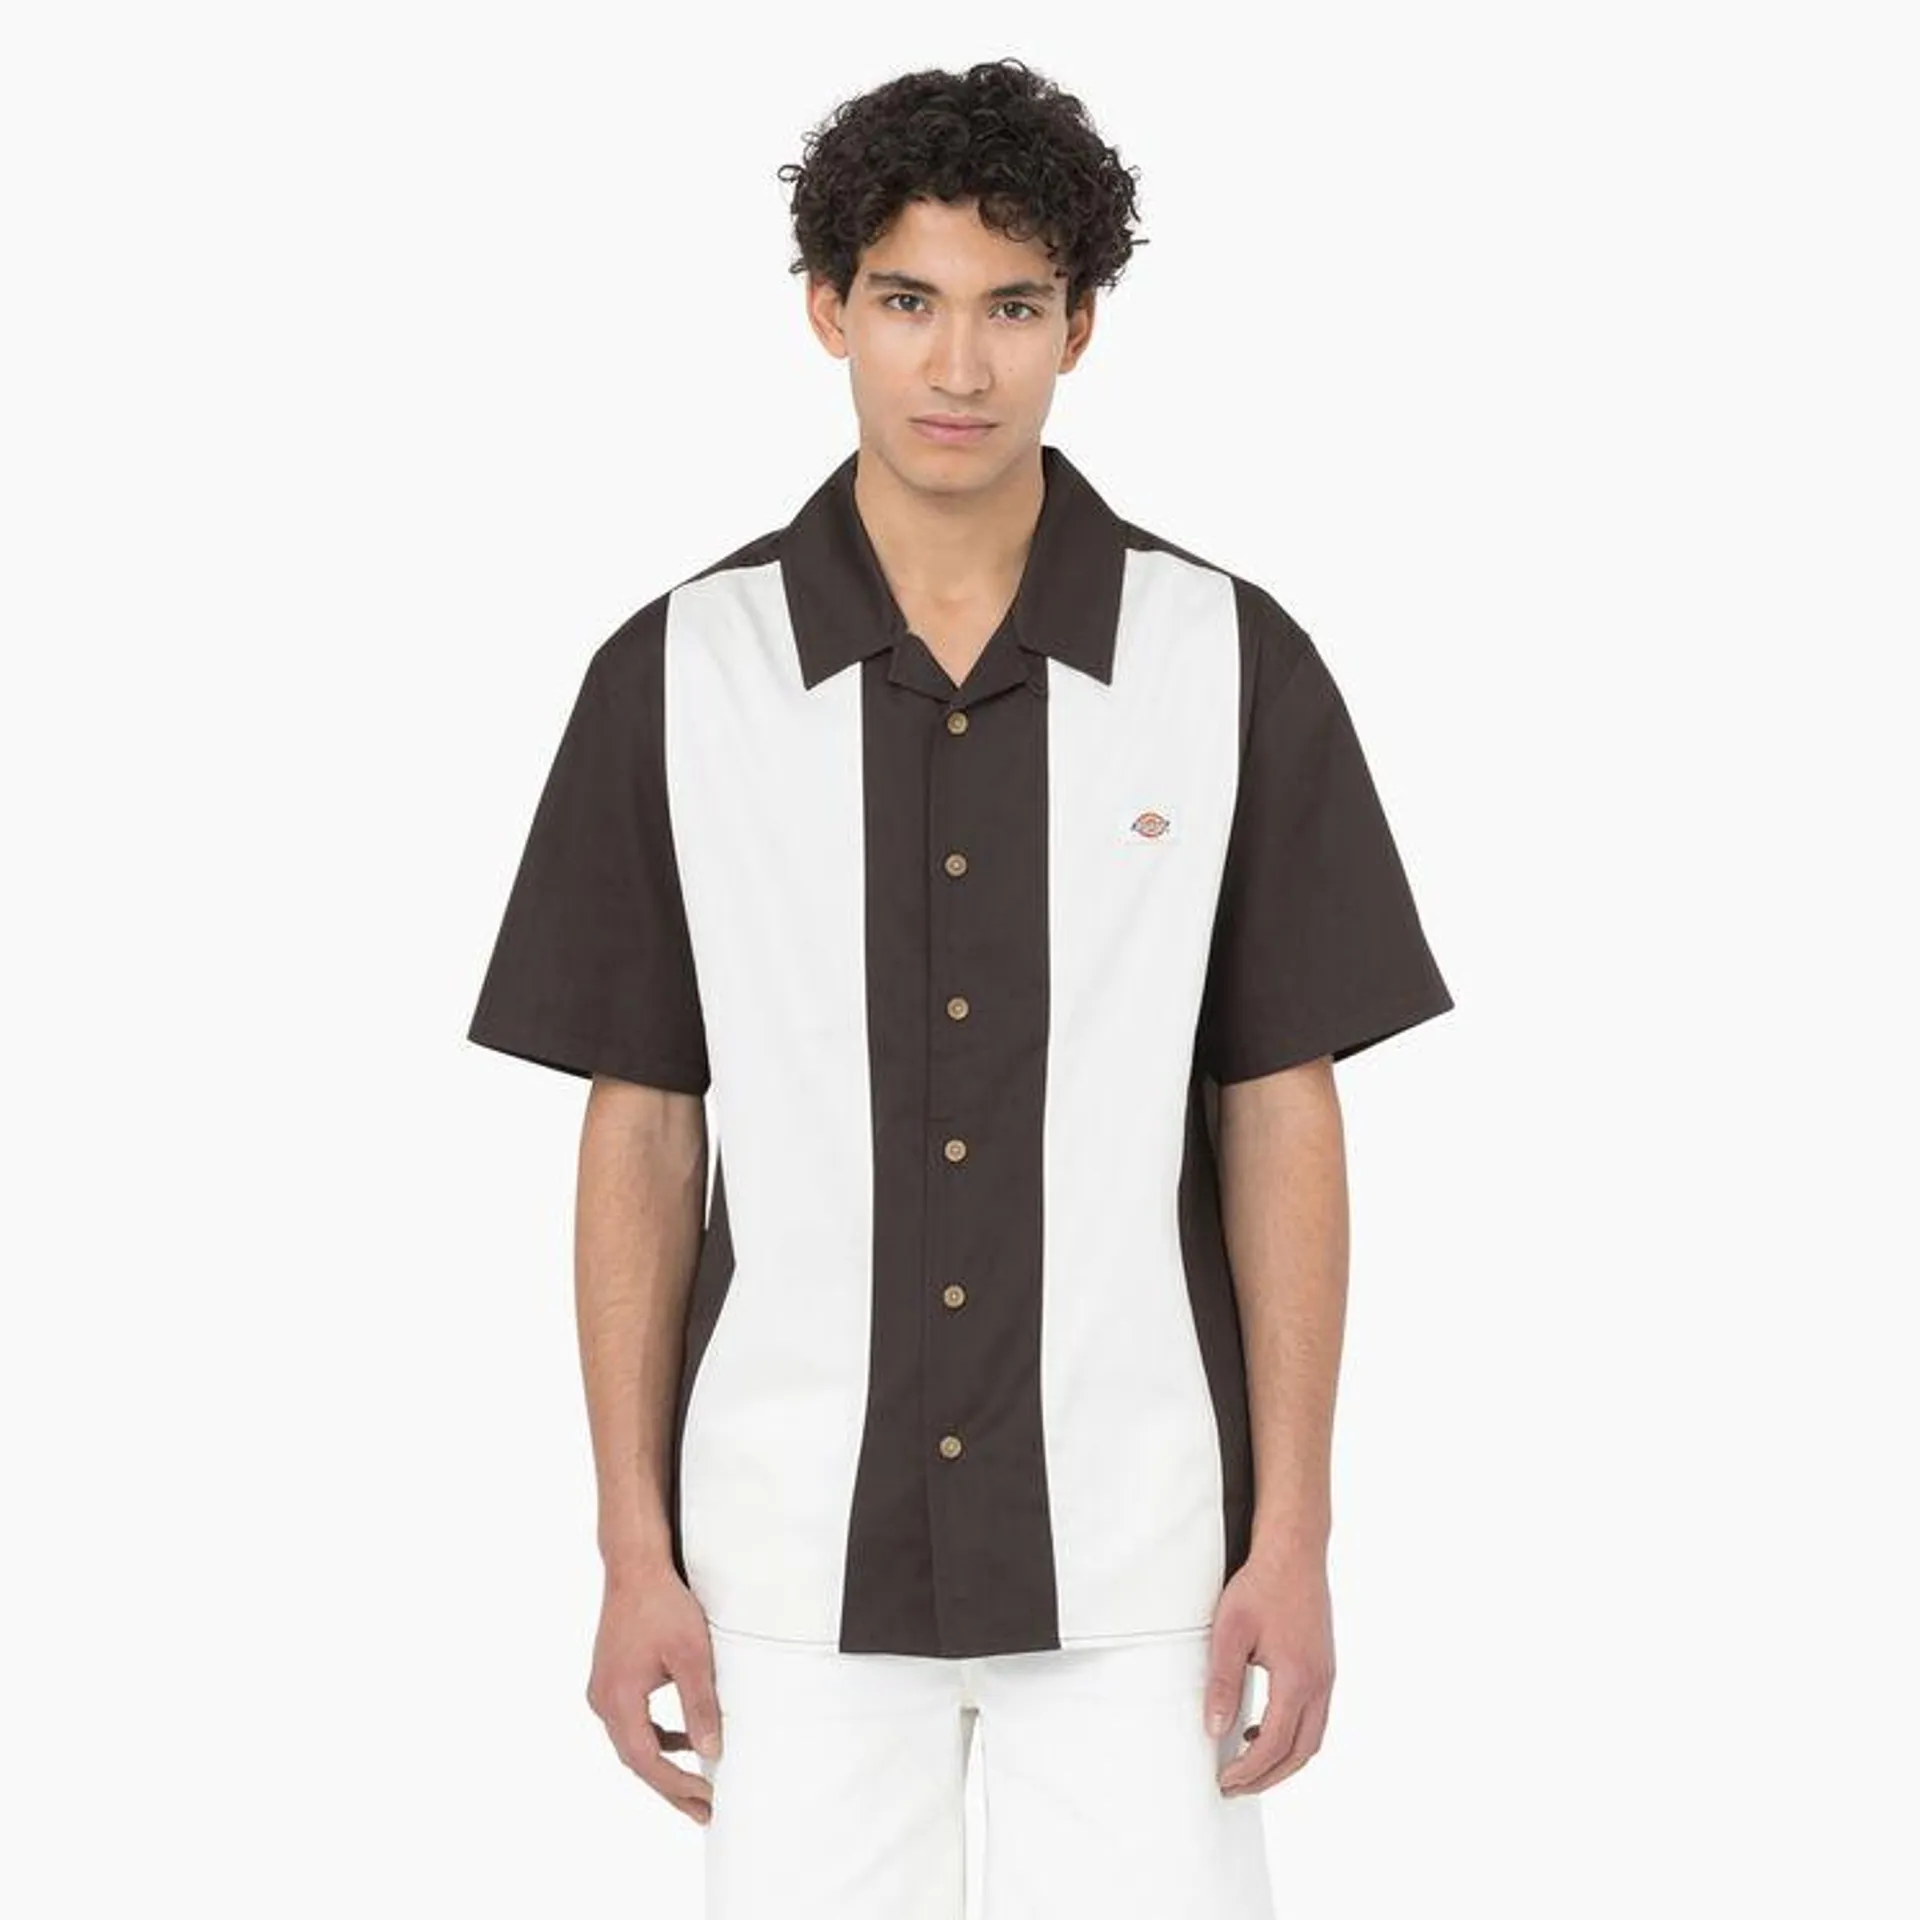 Westover Short Sleeve Shirt, Dark Brown